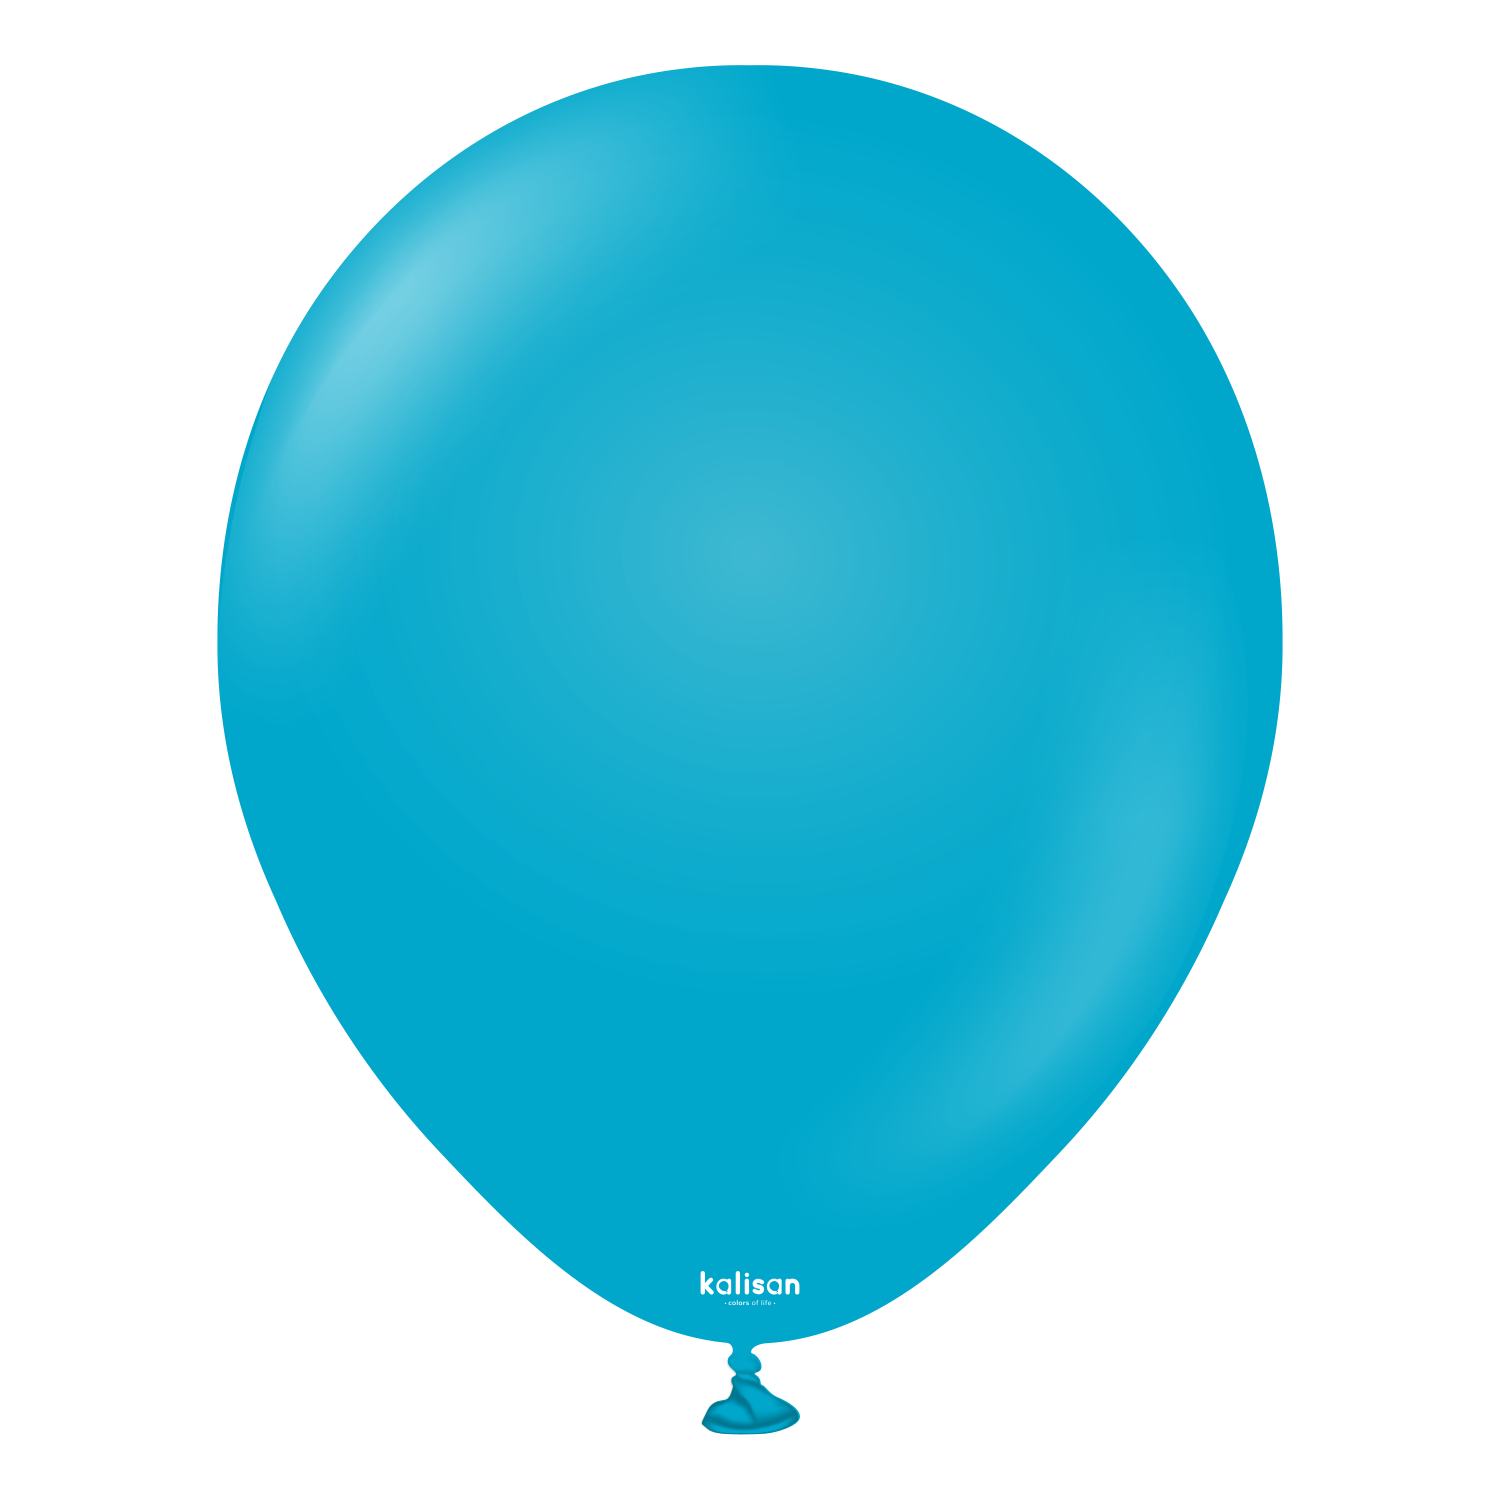 Kalisan 24" round standard balloons